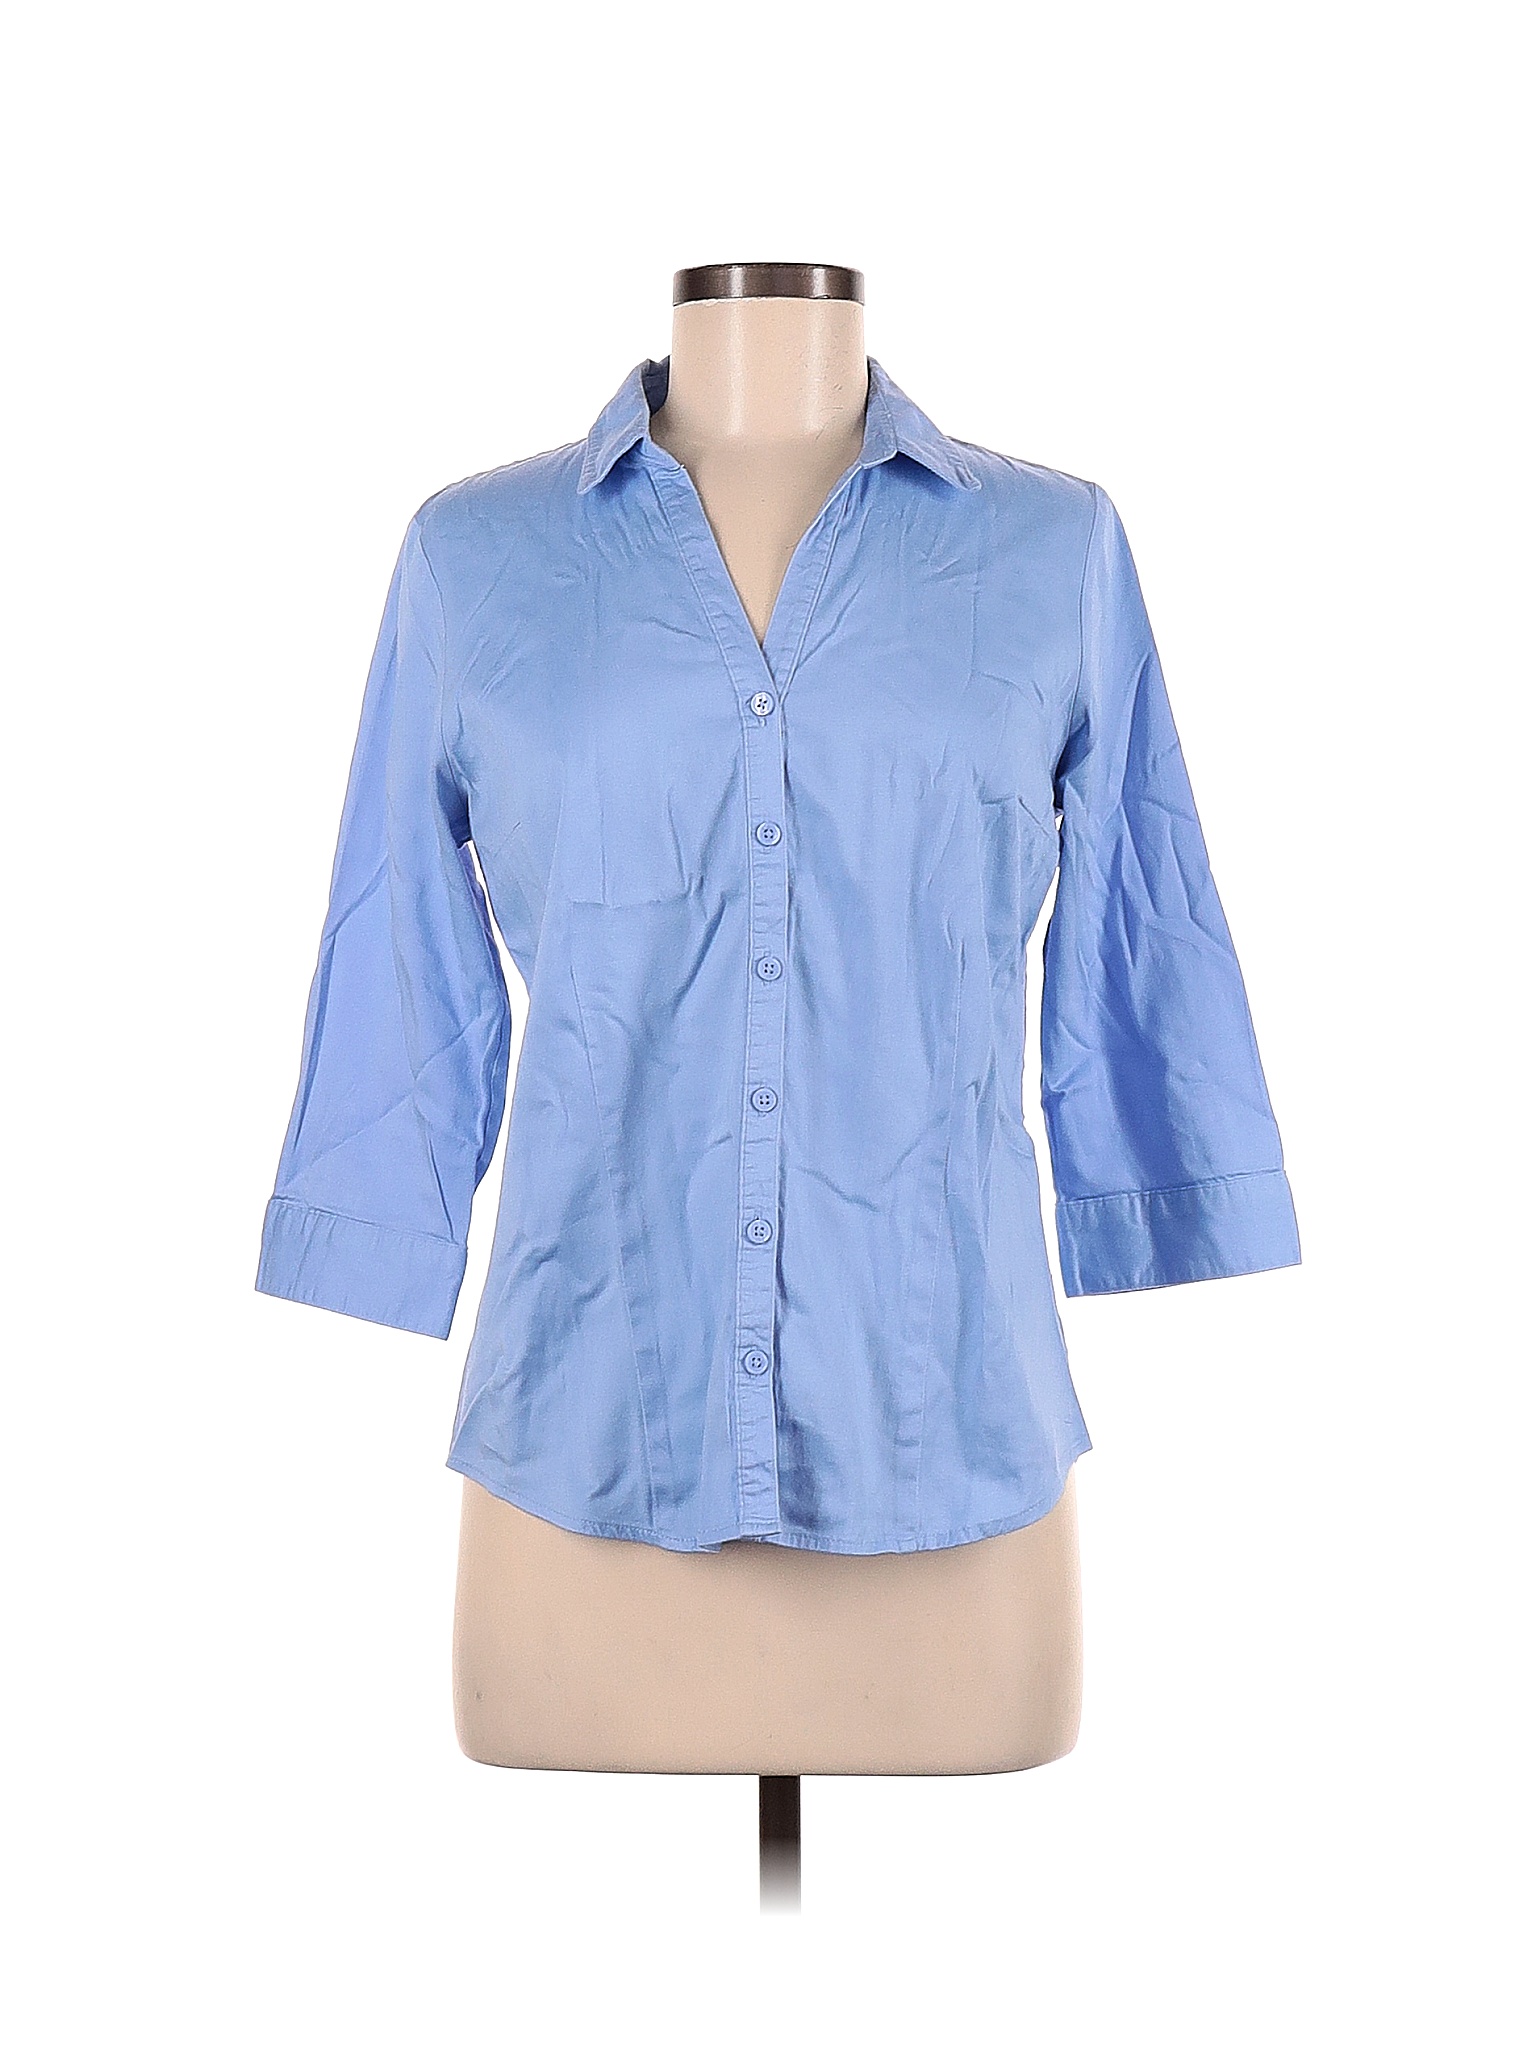 Dana Buchman Solid Blue Short Sleeve Button-Down Shirt Size M - 71% off ...